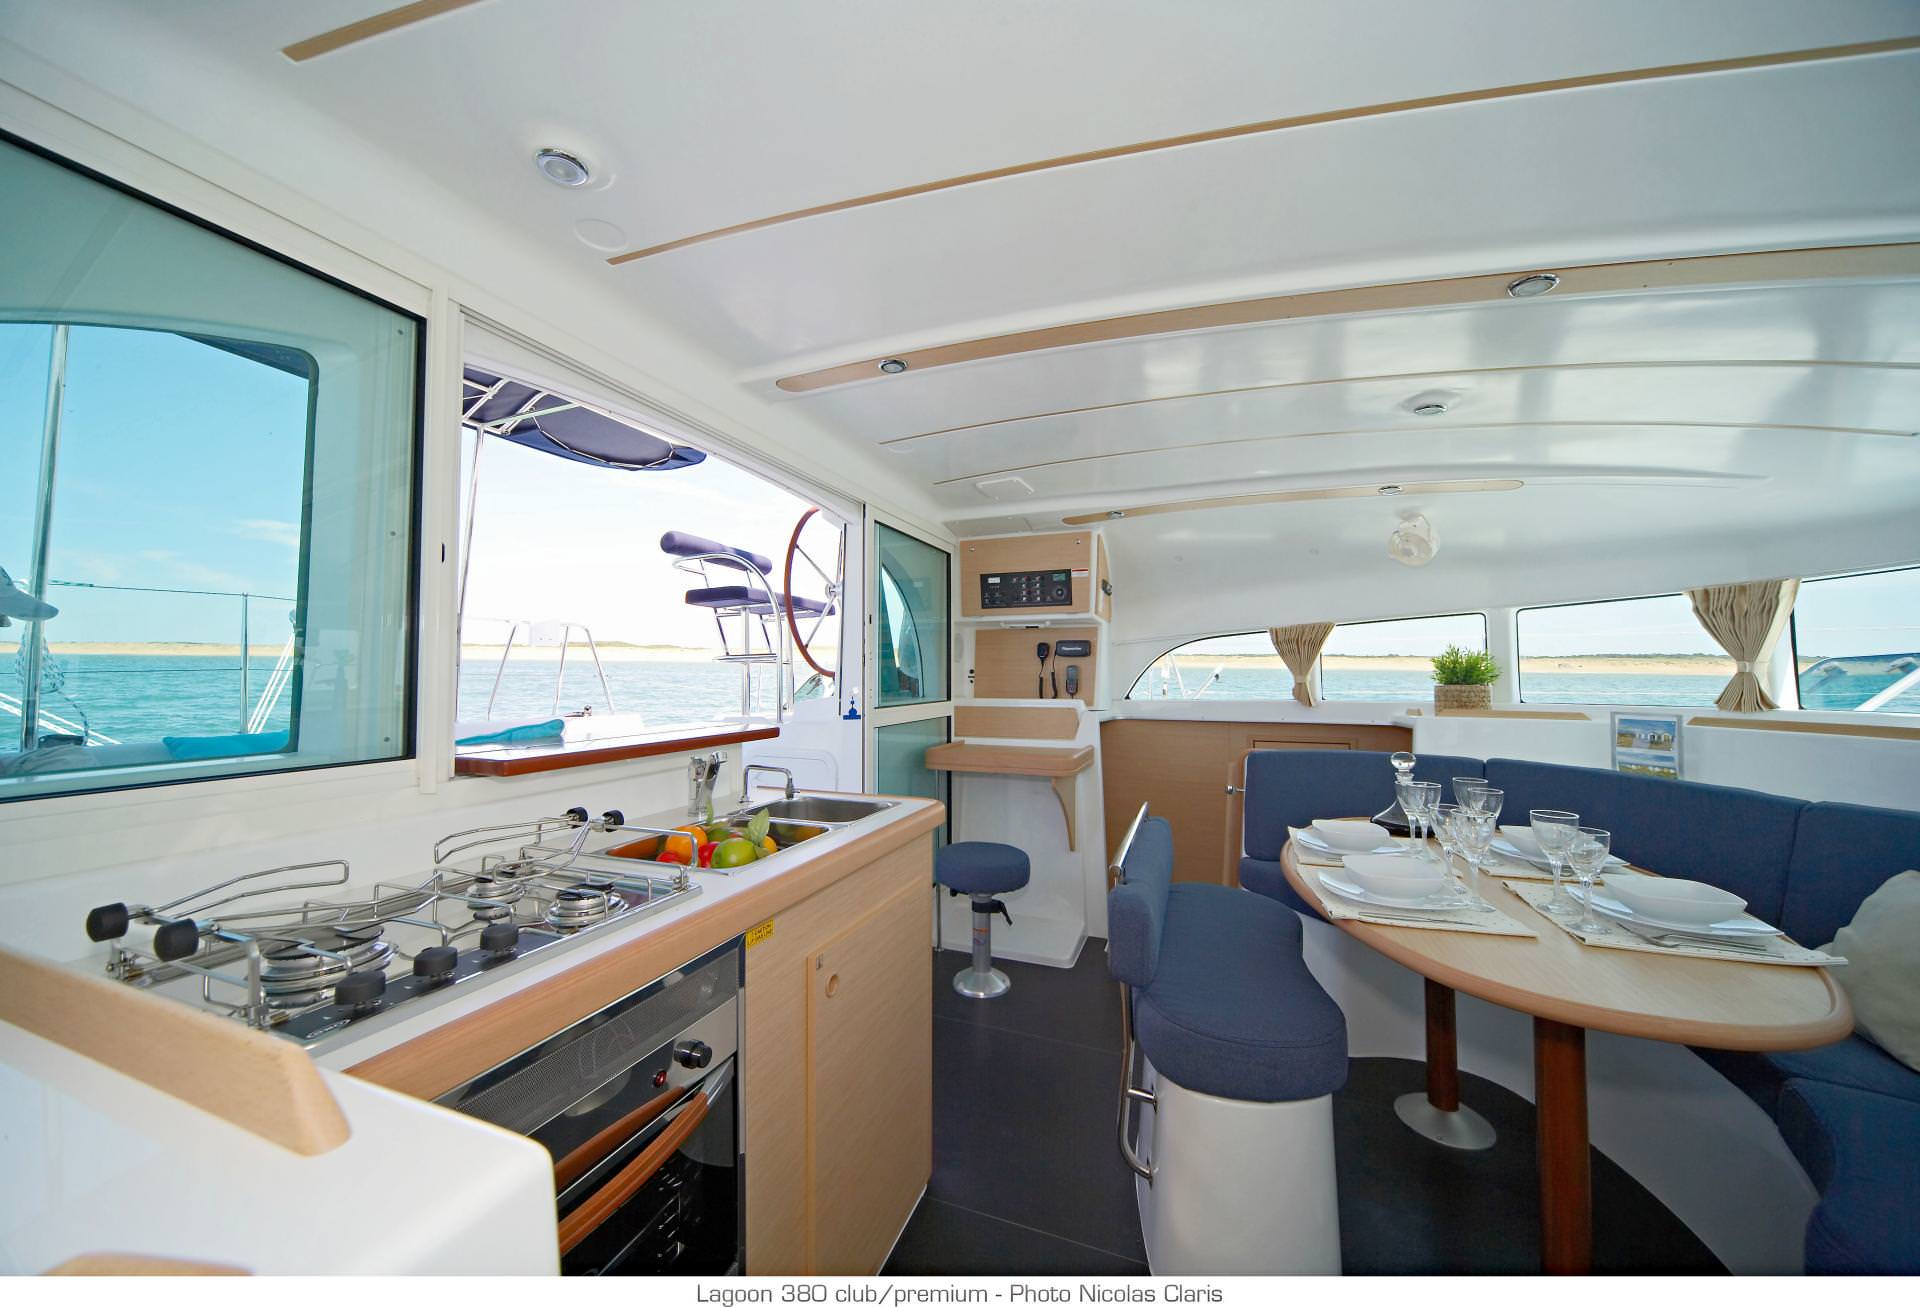 Catamaran Yacht 'HARMONY' Spacious galley and salon, 6 PAX, 2 Crew, 38.00 Ft, 11.00 Meters, Built 2016, Lagoon